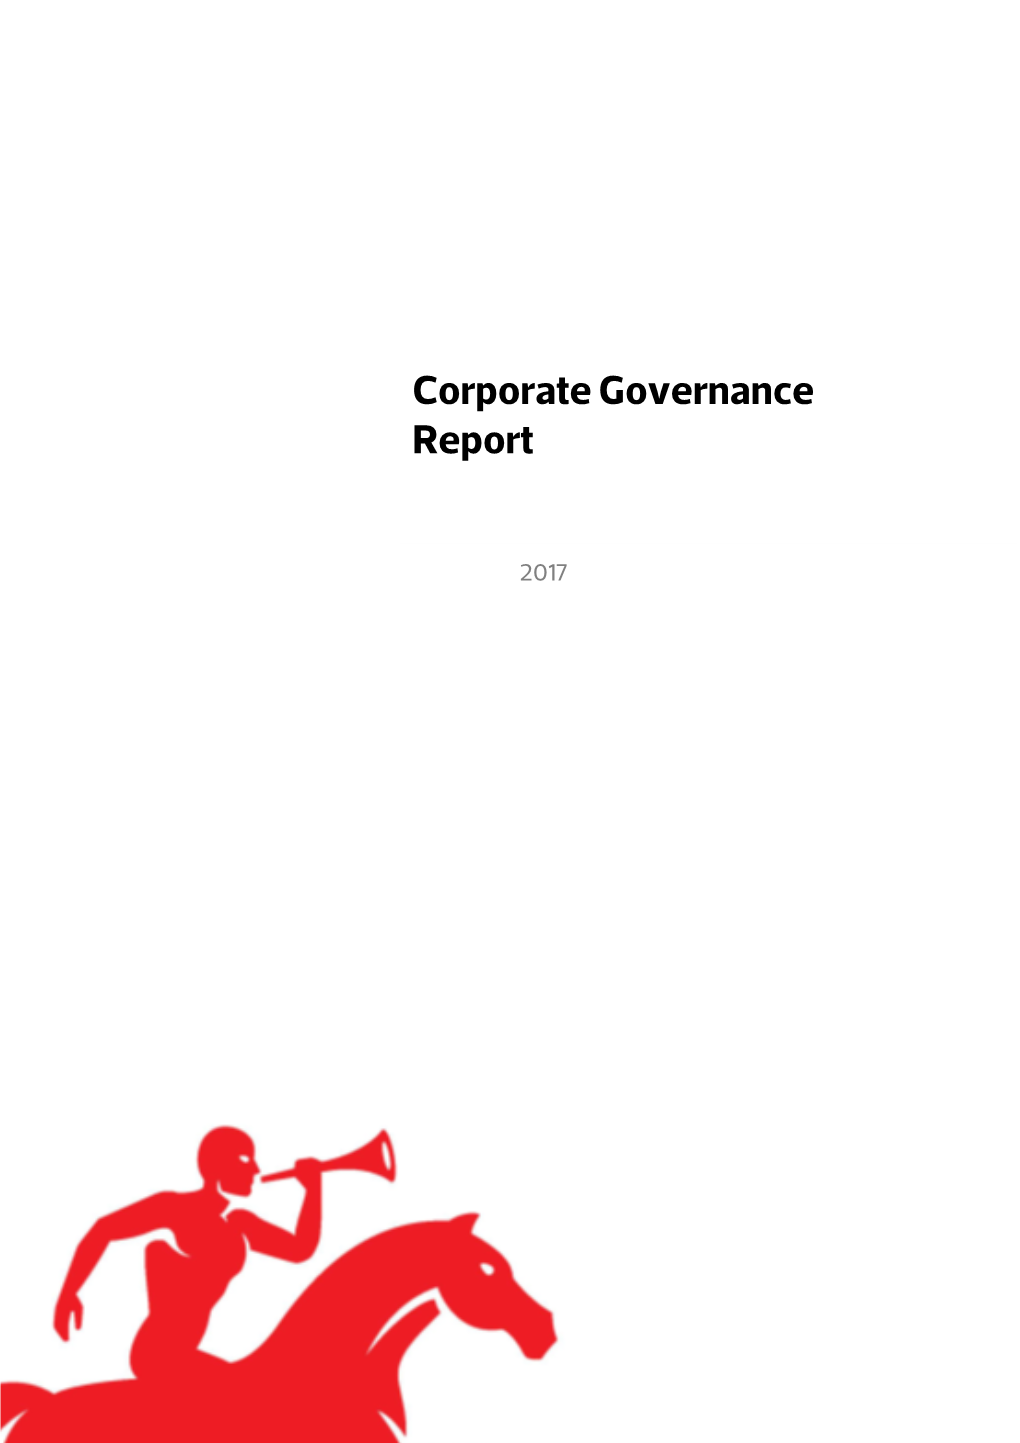 Correios De Portugal, S.A. Informs About Corporate Governance